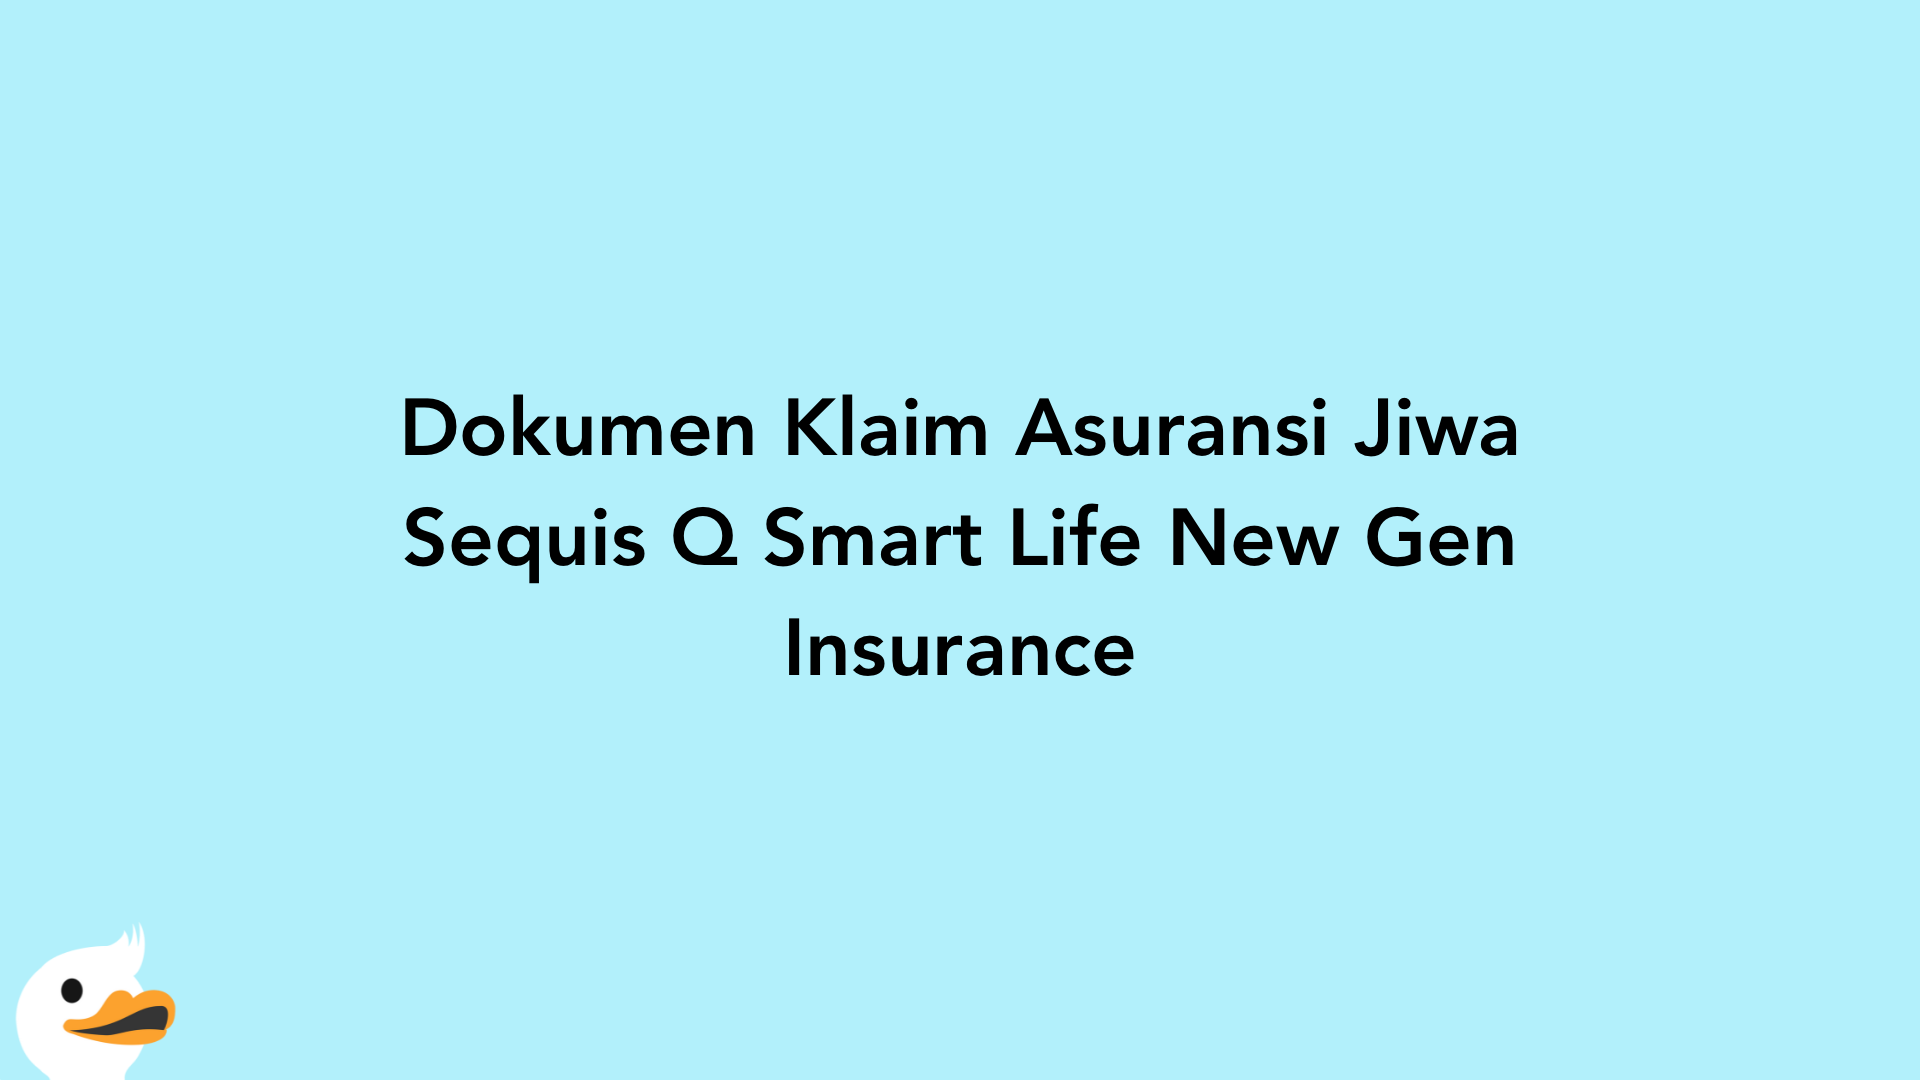 Dokumen Klaim Asuransi Jiwa Sequis Q Smart Life New Gen Insurance